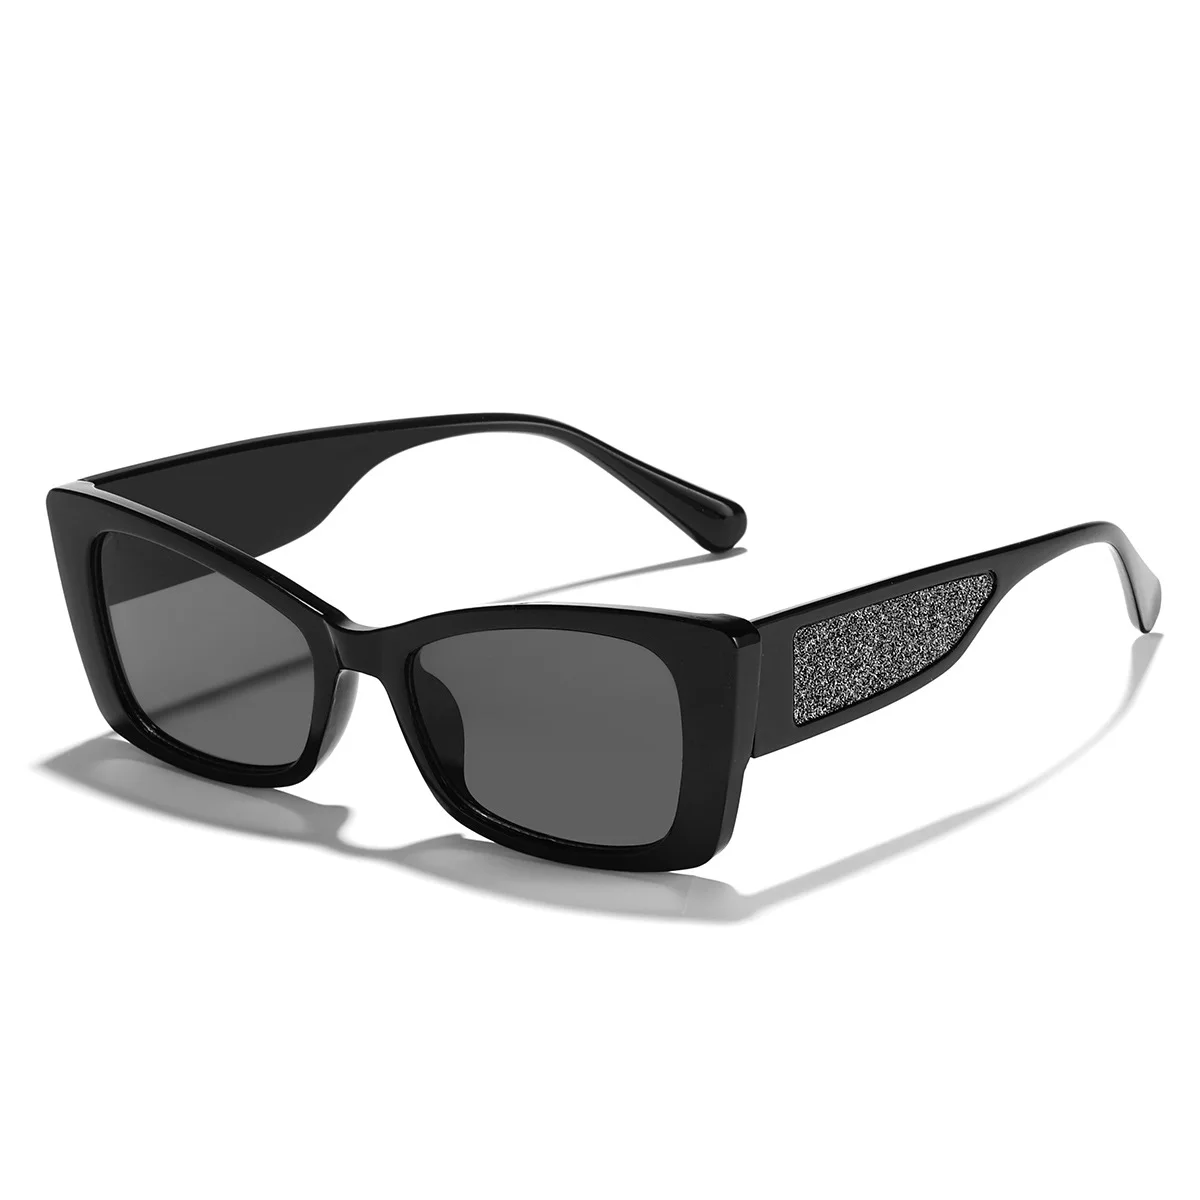 Spectra Wave Gradient Sunglasses